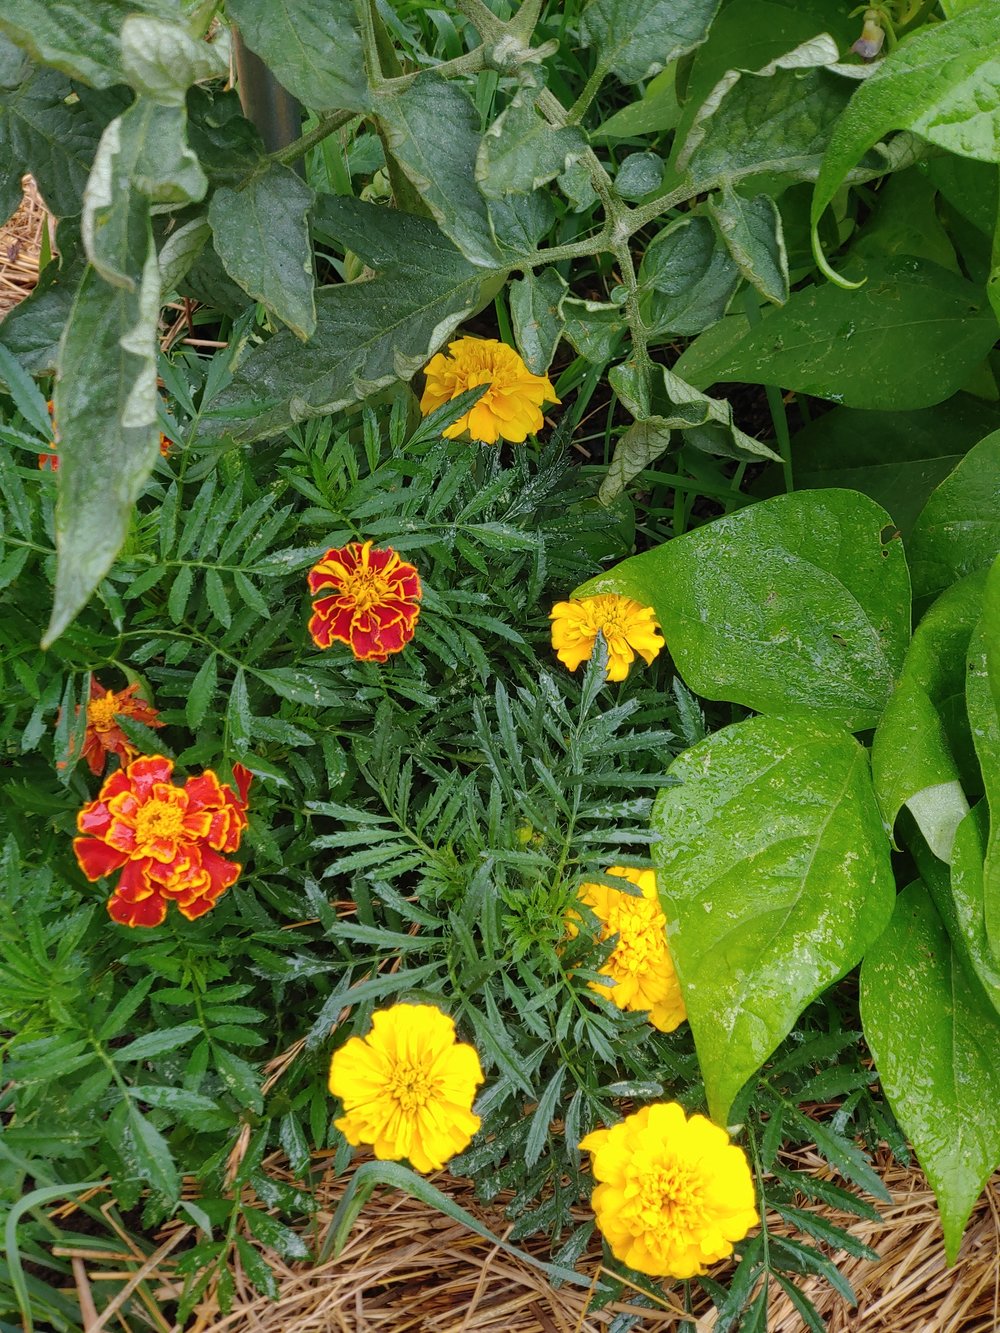 Companion planting - marigolds, bush beans, tomatoes